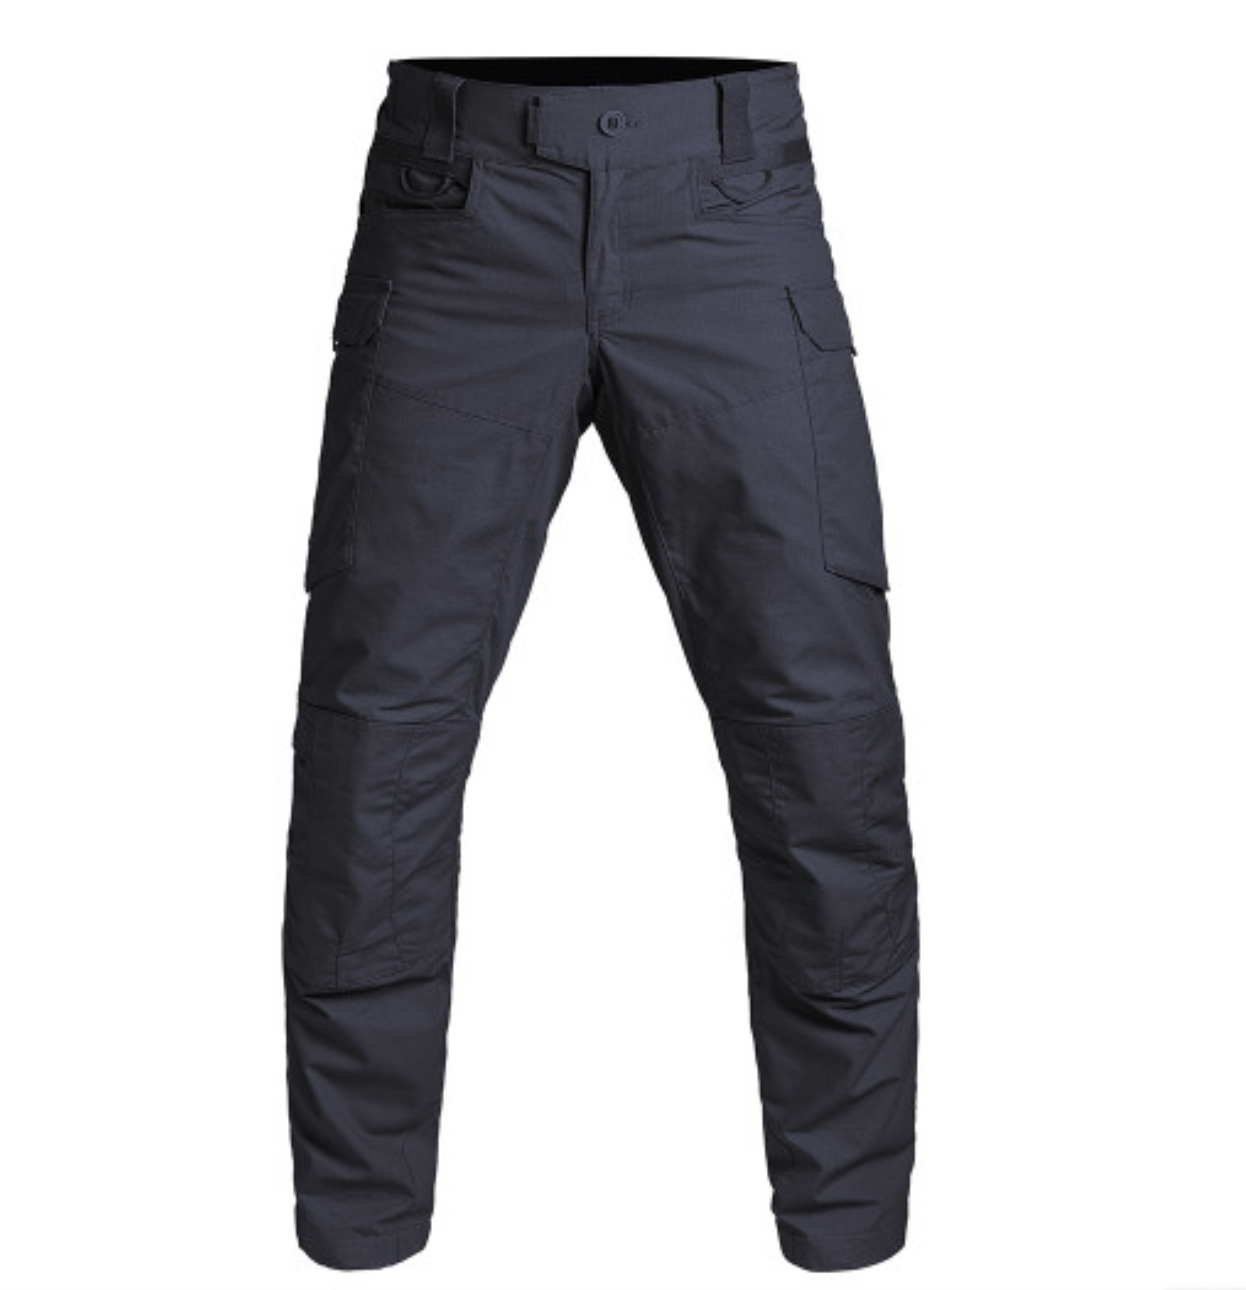 Pantalon de combat Fighter entrejambe 83 cm bleu marine